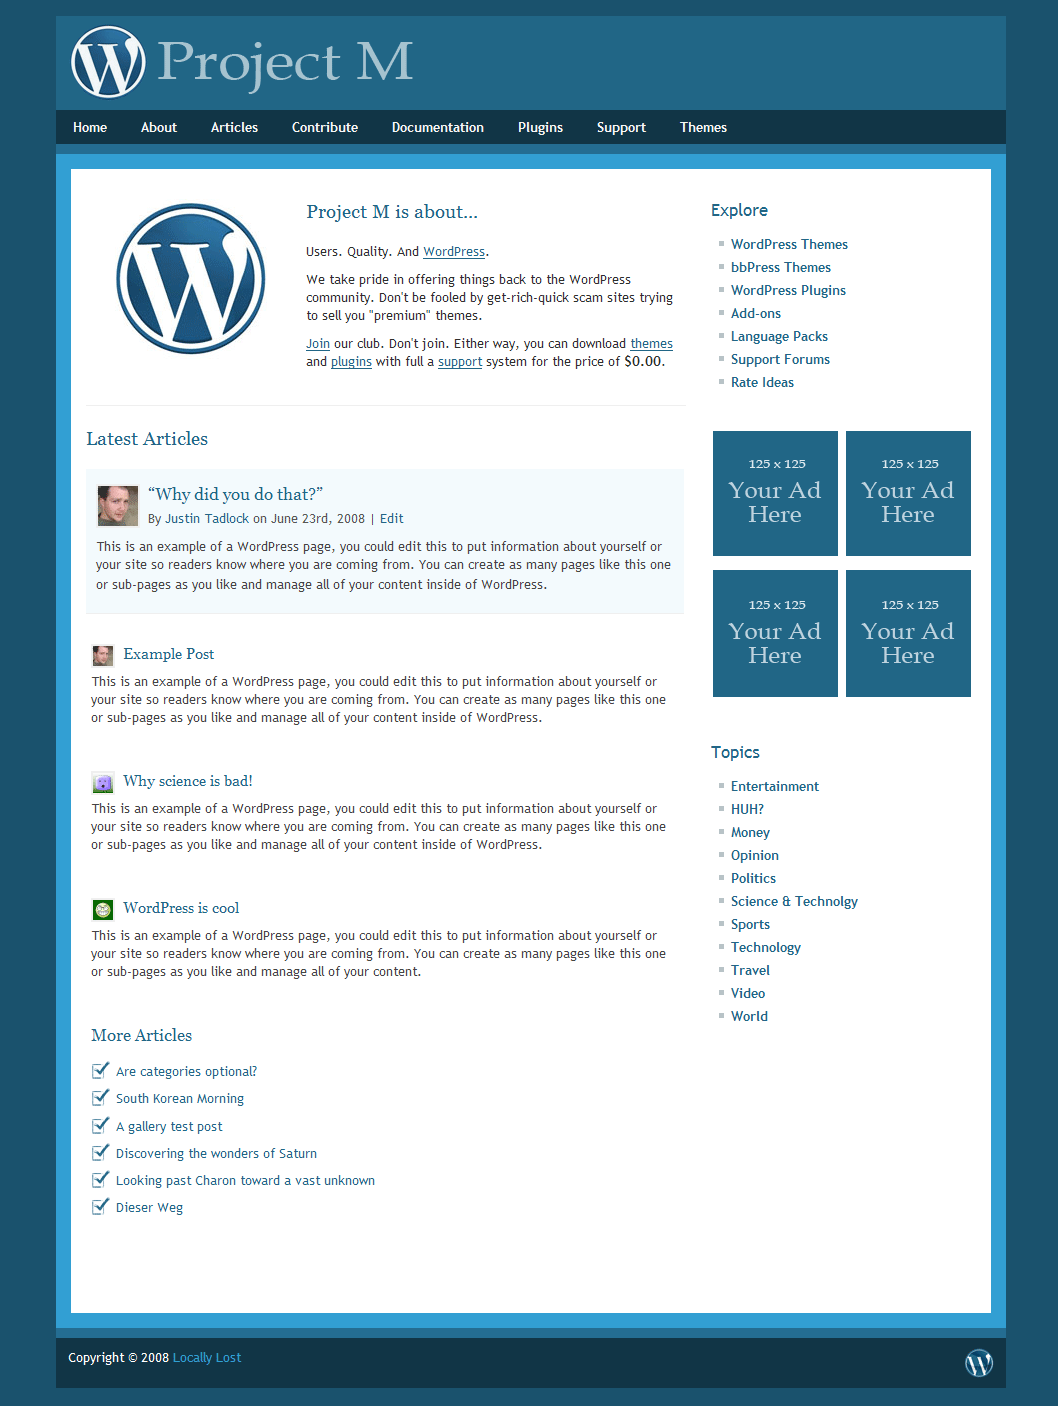 PROJECT M: A WordPress community